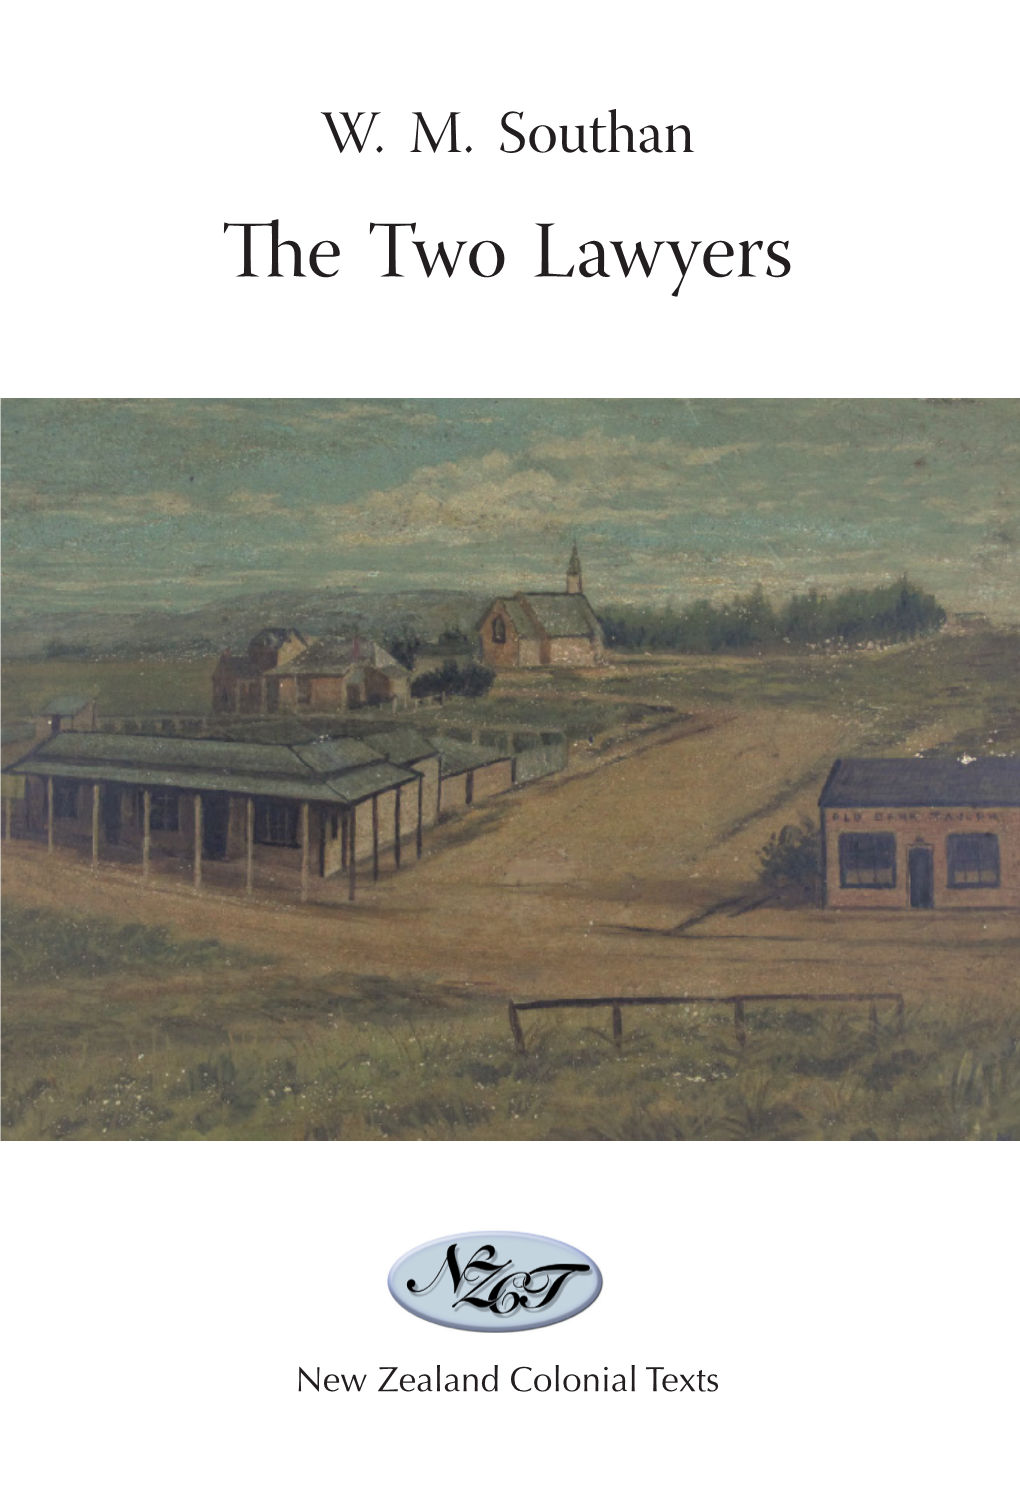 E Two Lawyers